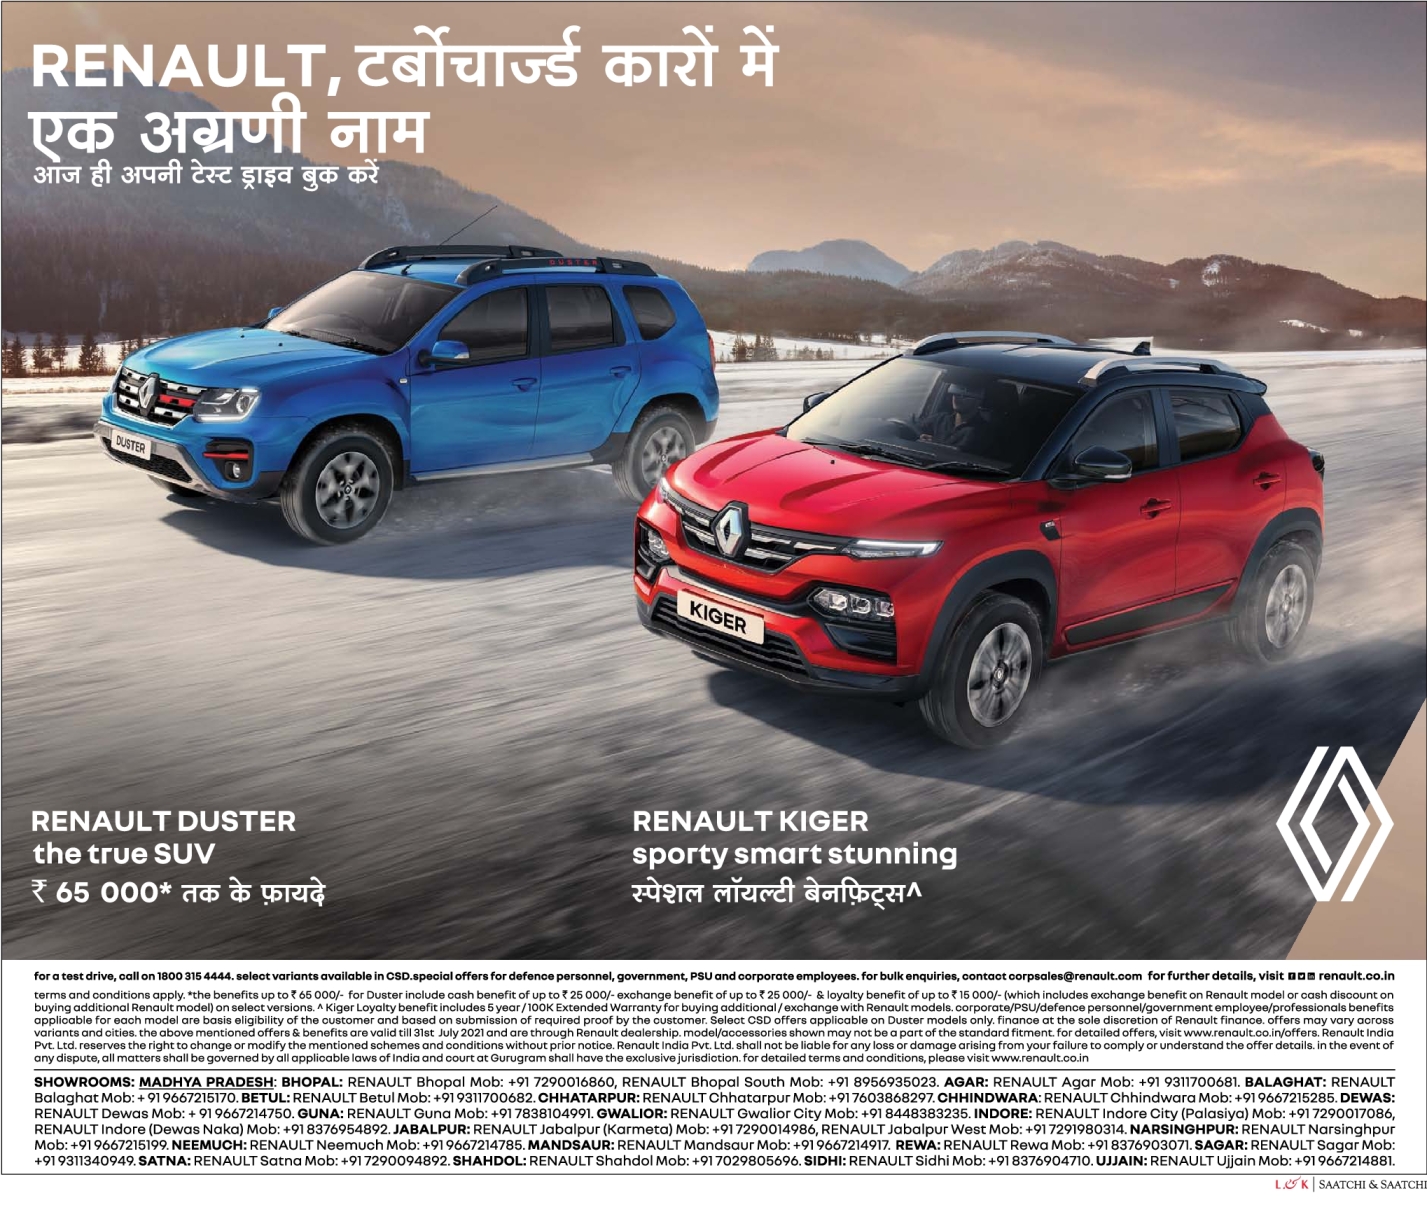 renault-duster-the-true-suv-renault-kiger-sporty-smart-stunning-car-ad-dainik-bhaskar-bhopal-7-7-2021